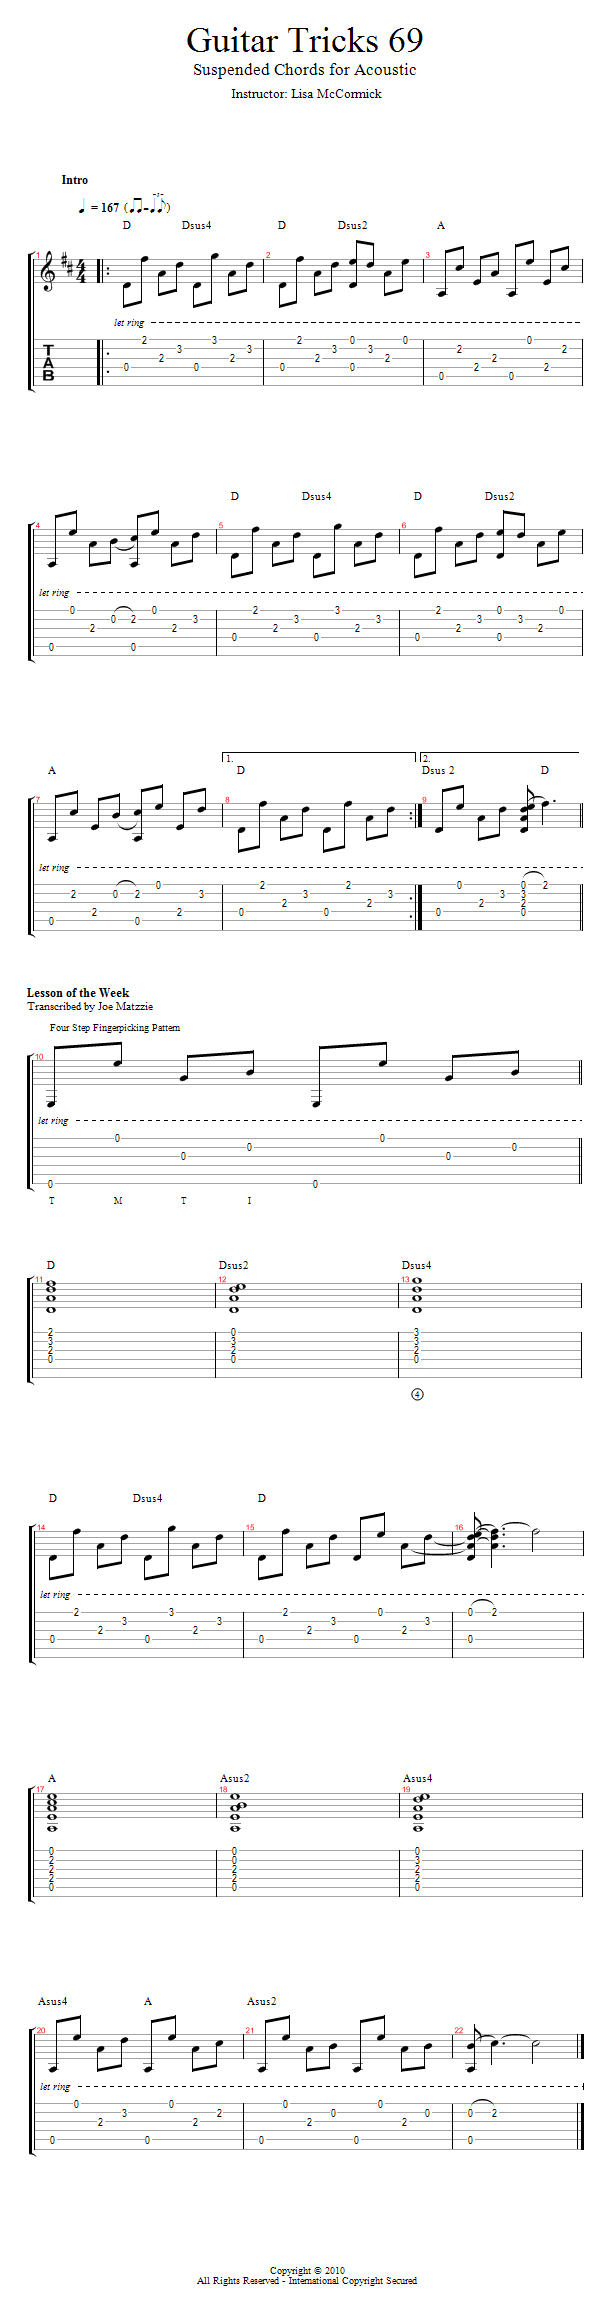 Guitar Tricks 69: Sus Chords song notation